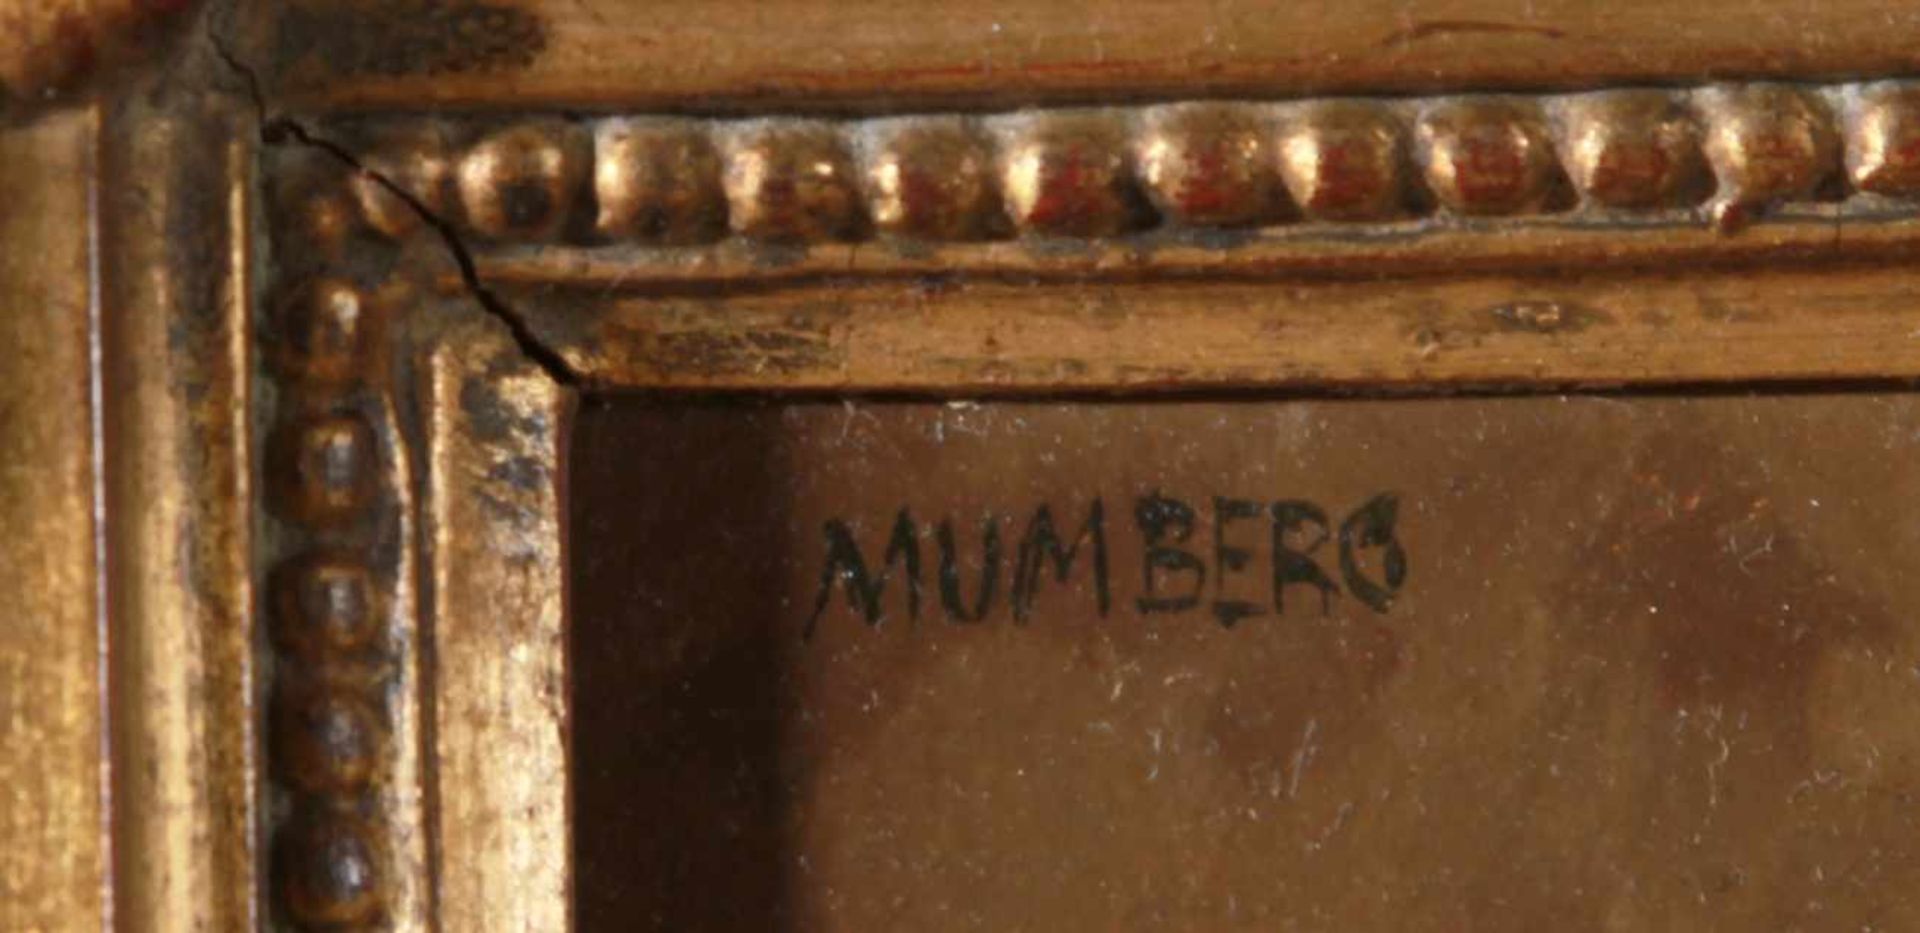 Mumberg, dt. Maler Mitte 20. Jh. "Charakterkopf", sign., Öl/Hartfaser, 20 x 16 cm- - -20.00 % - Bild 2 aus 2